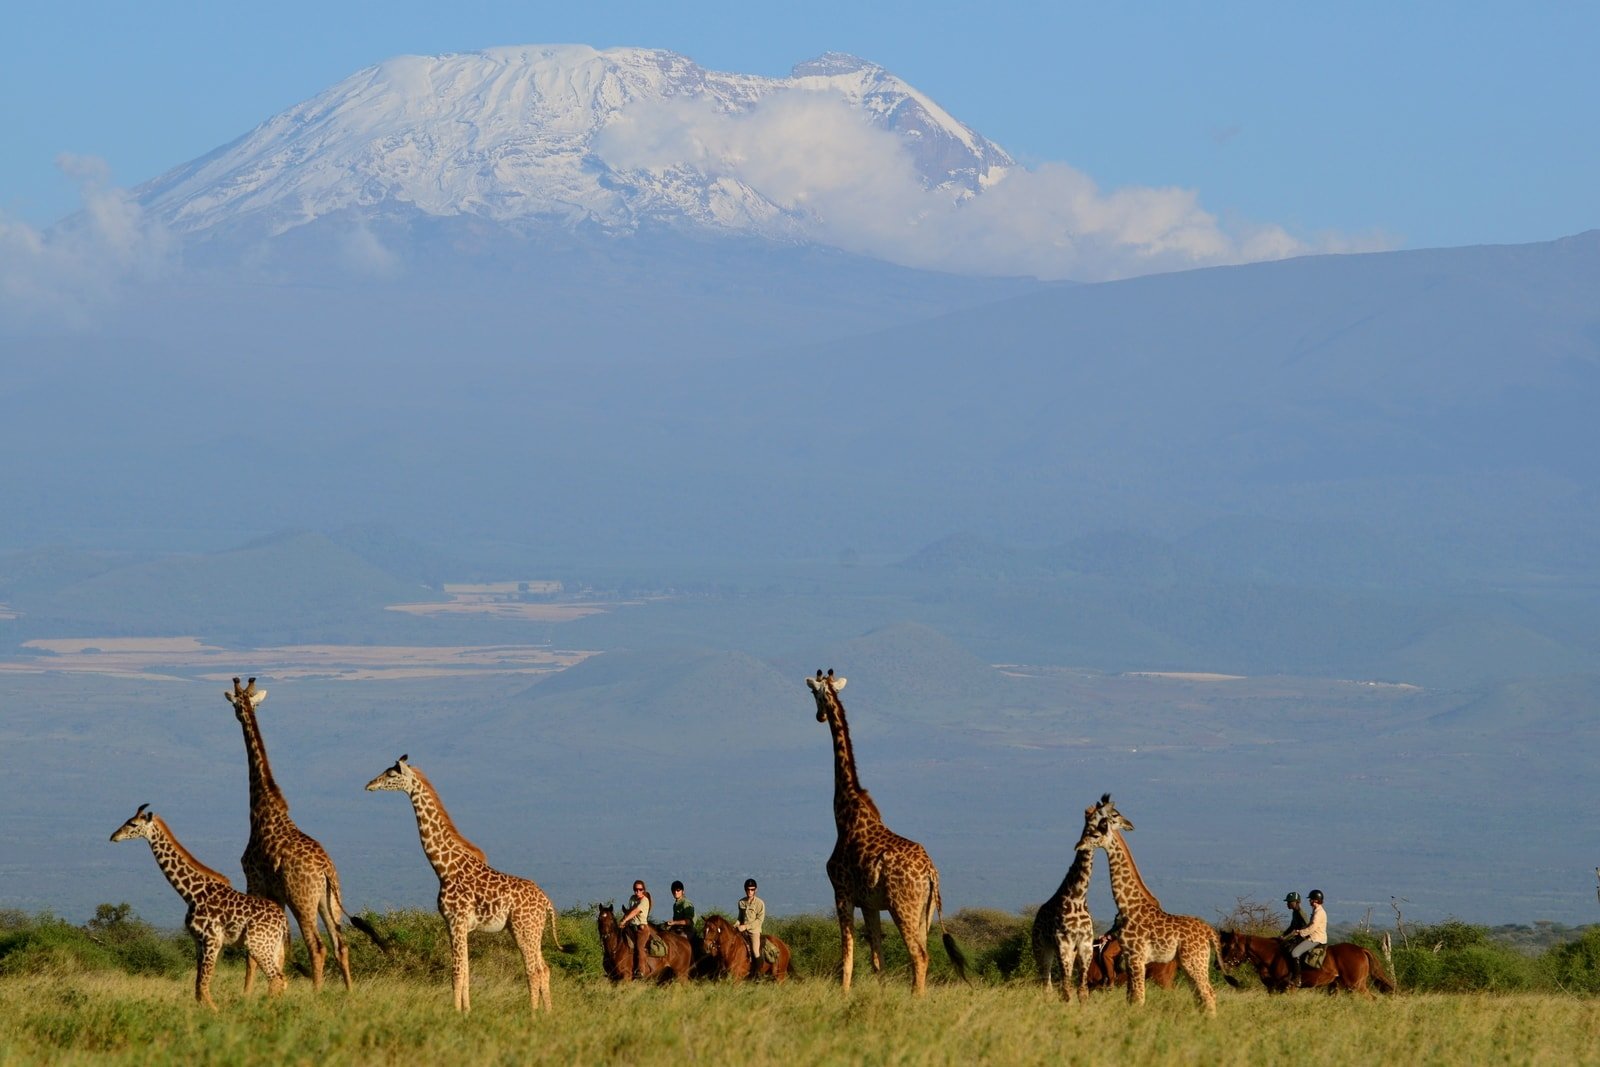 Giraffe and horse riders with Kilimanjaro